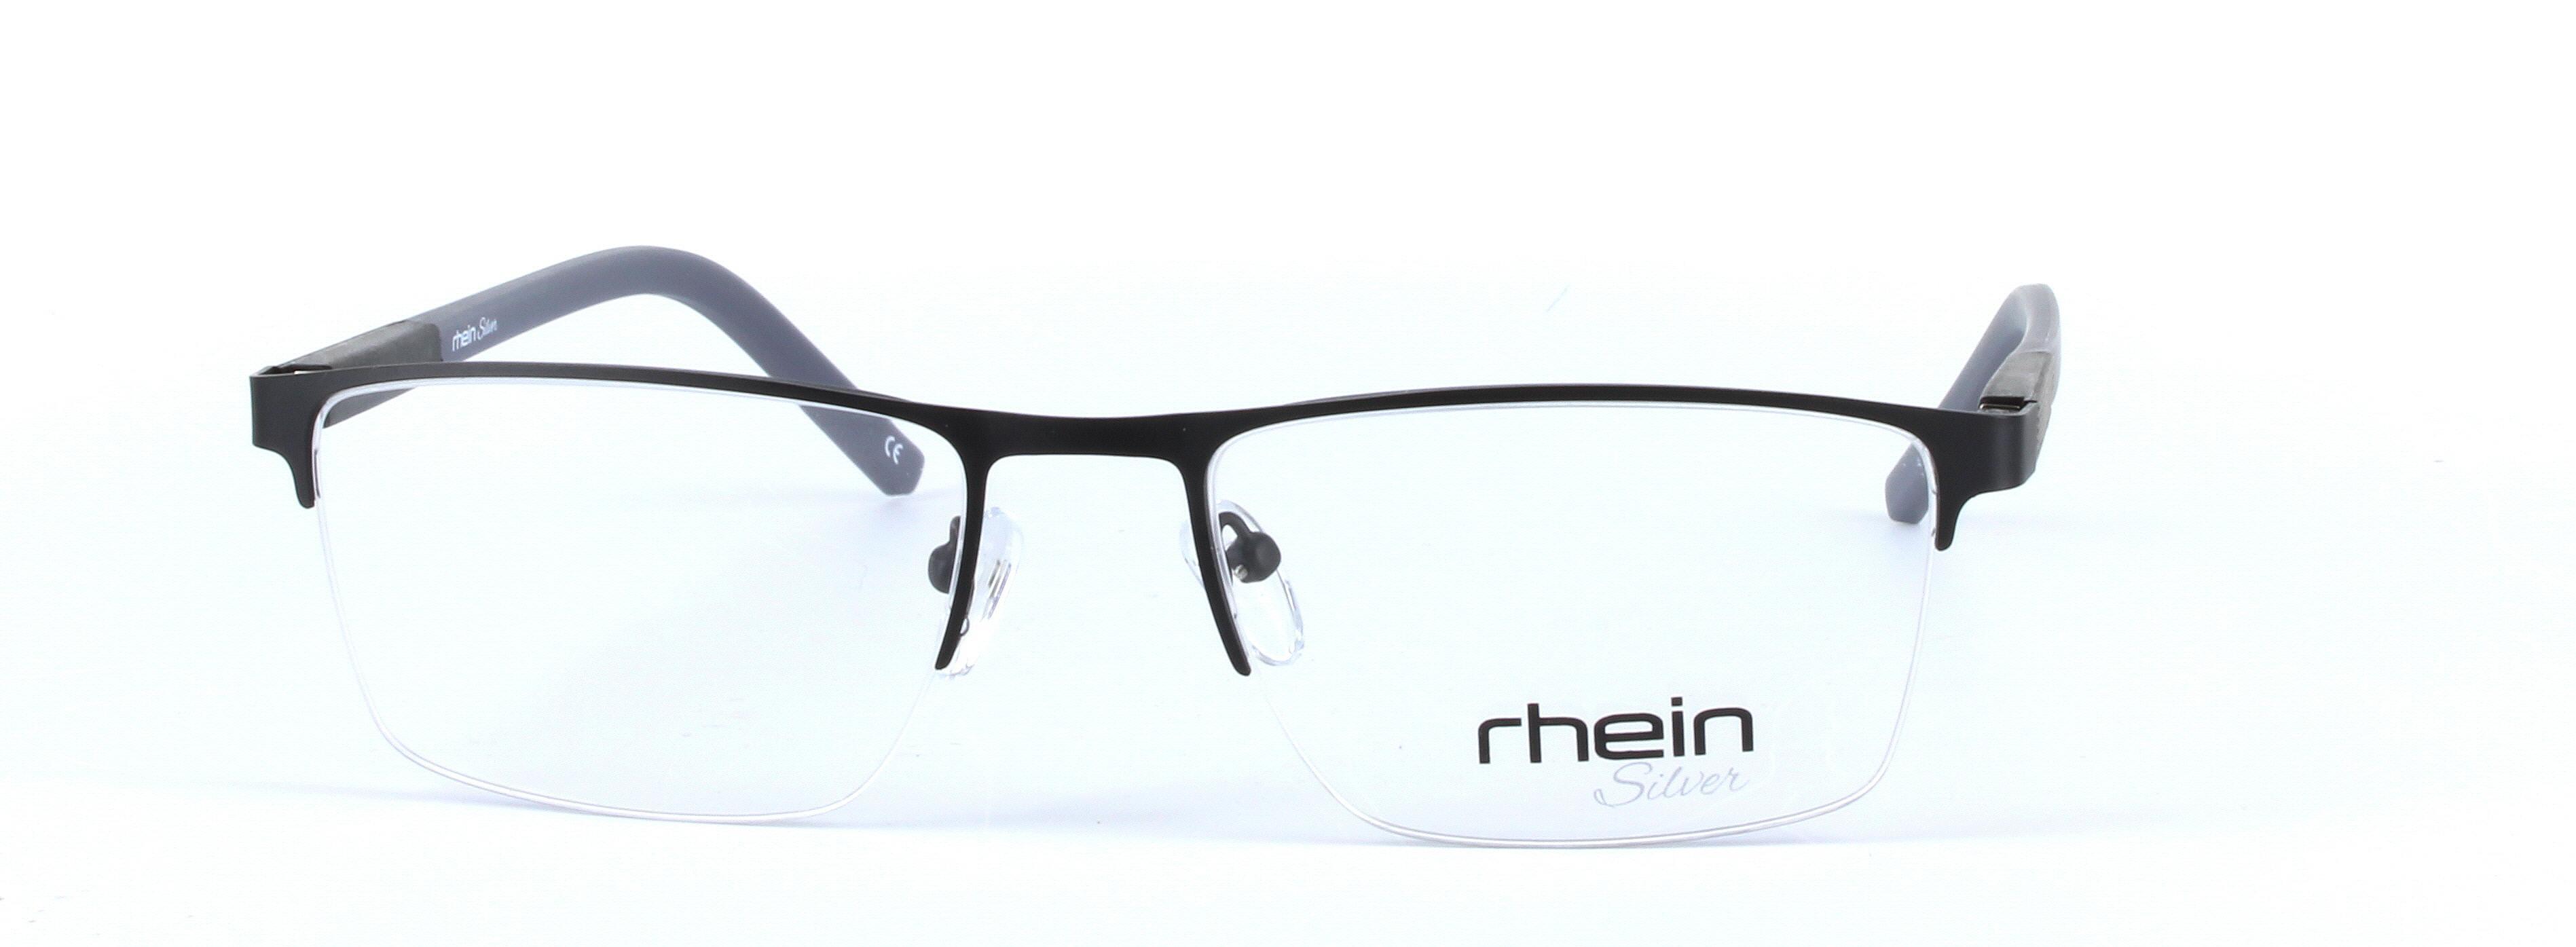 Dell Grey Semi Rimless Rectangular Metal Glasses - Image View 5